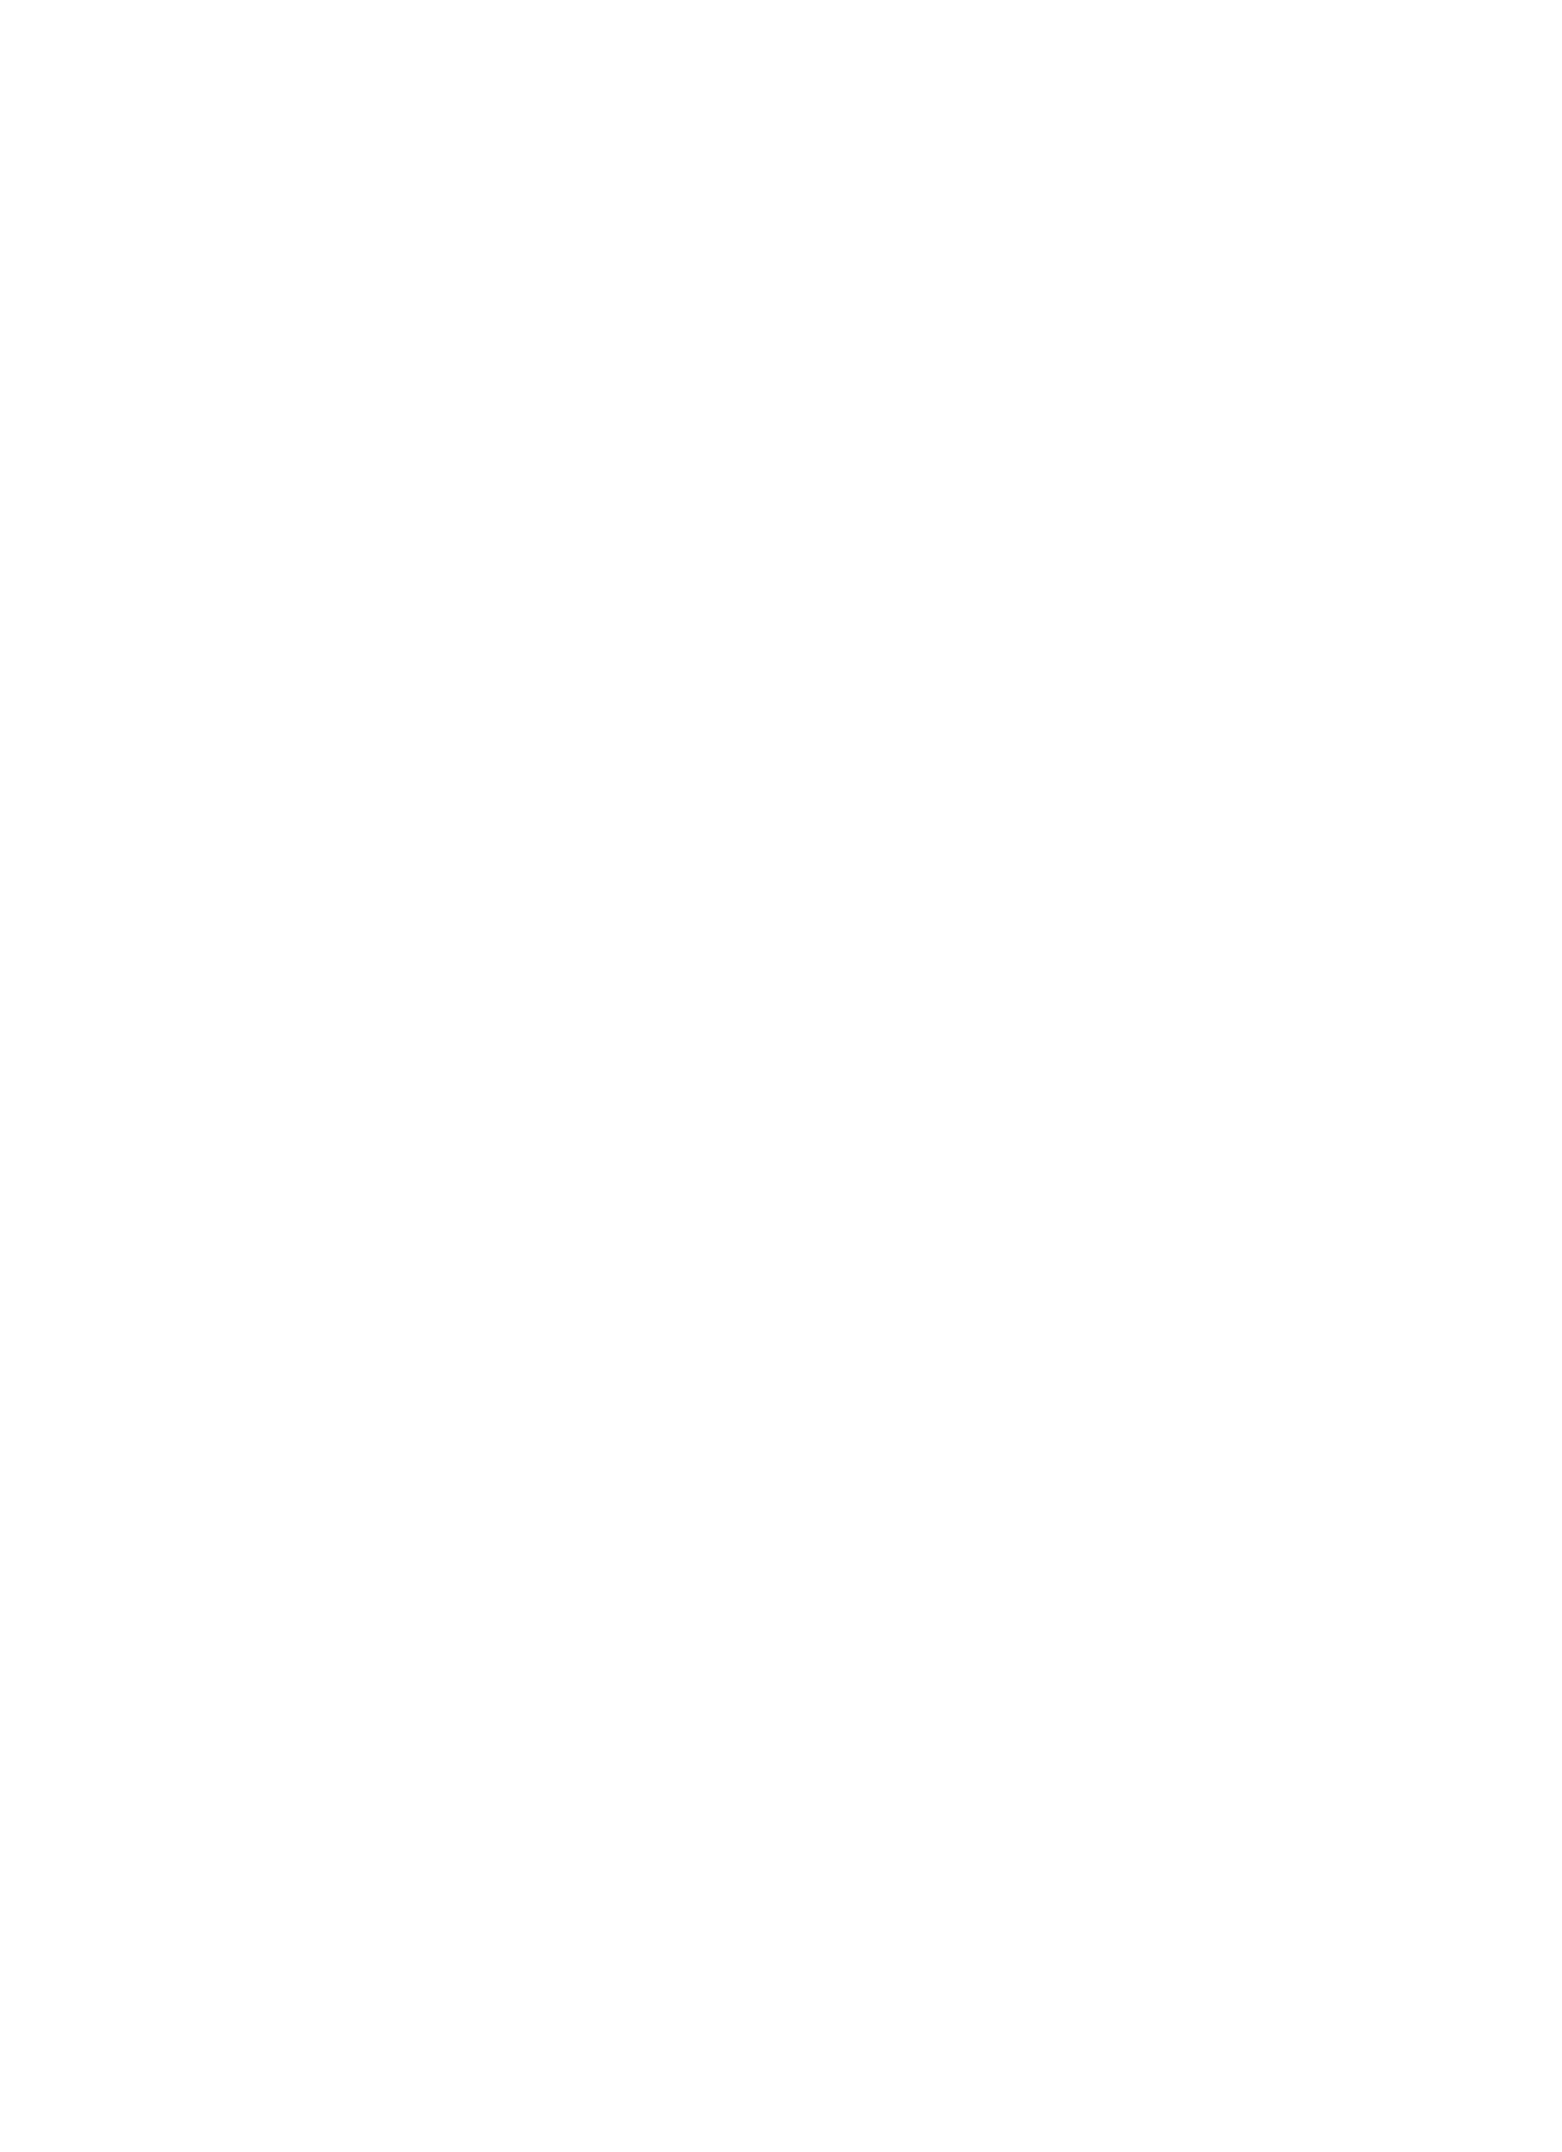 ROCK Ministry USA